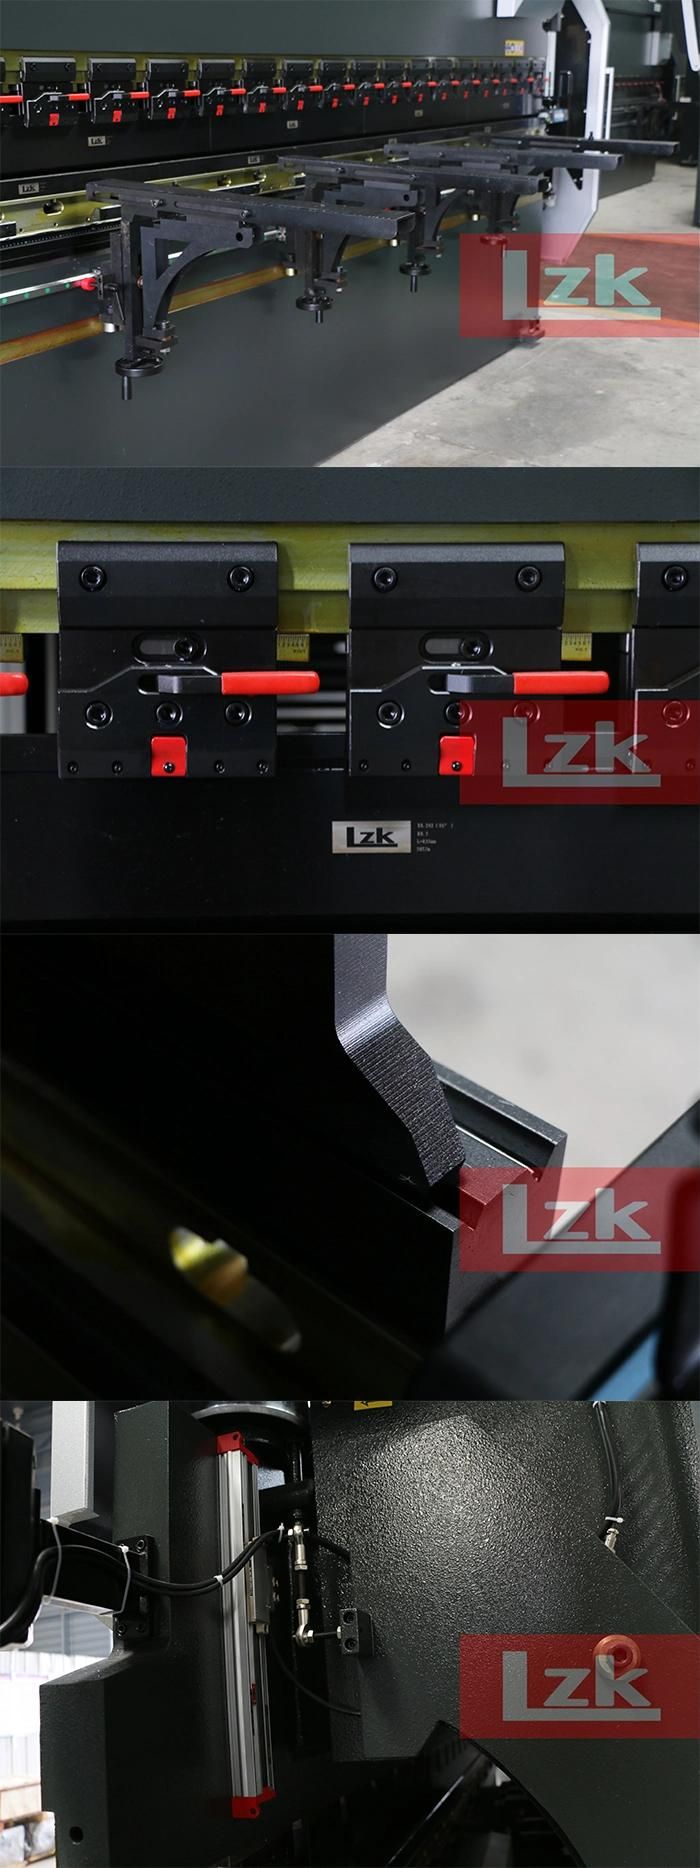 10mm CNC Lift Elevator Metal Sheet Bending Folding Machine